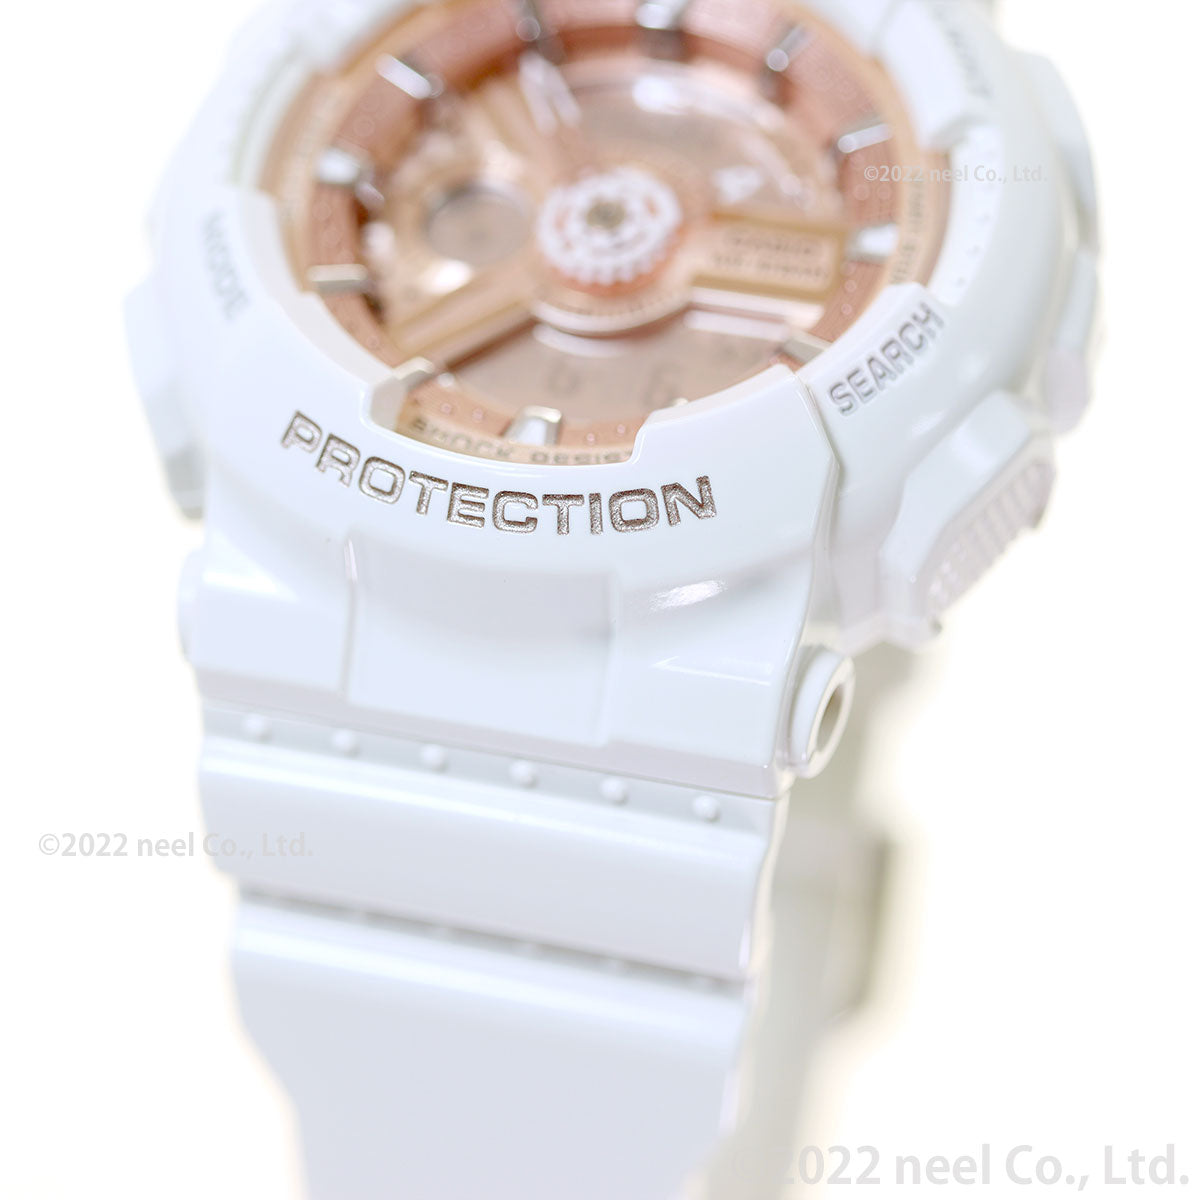 BABY-G カシオ ベビーG レディース 腕時計 ホワイト 白 ピンク アナデジ BA-110X-7A1JF